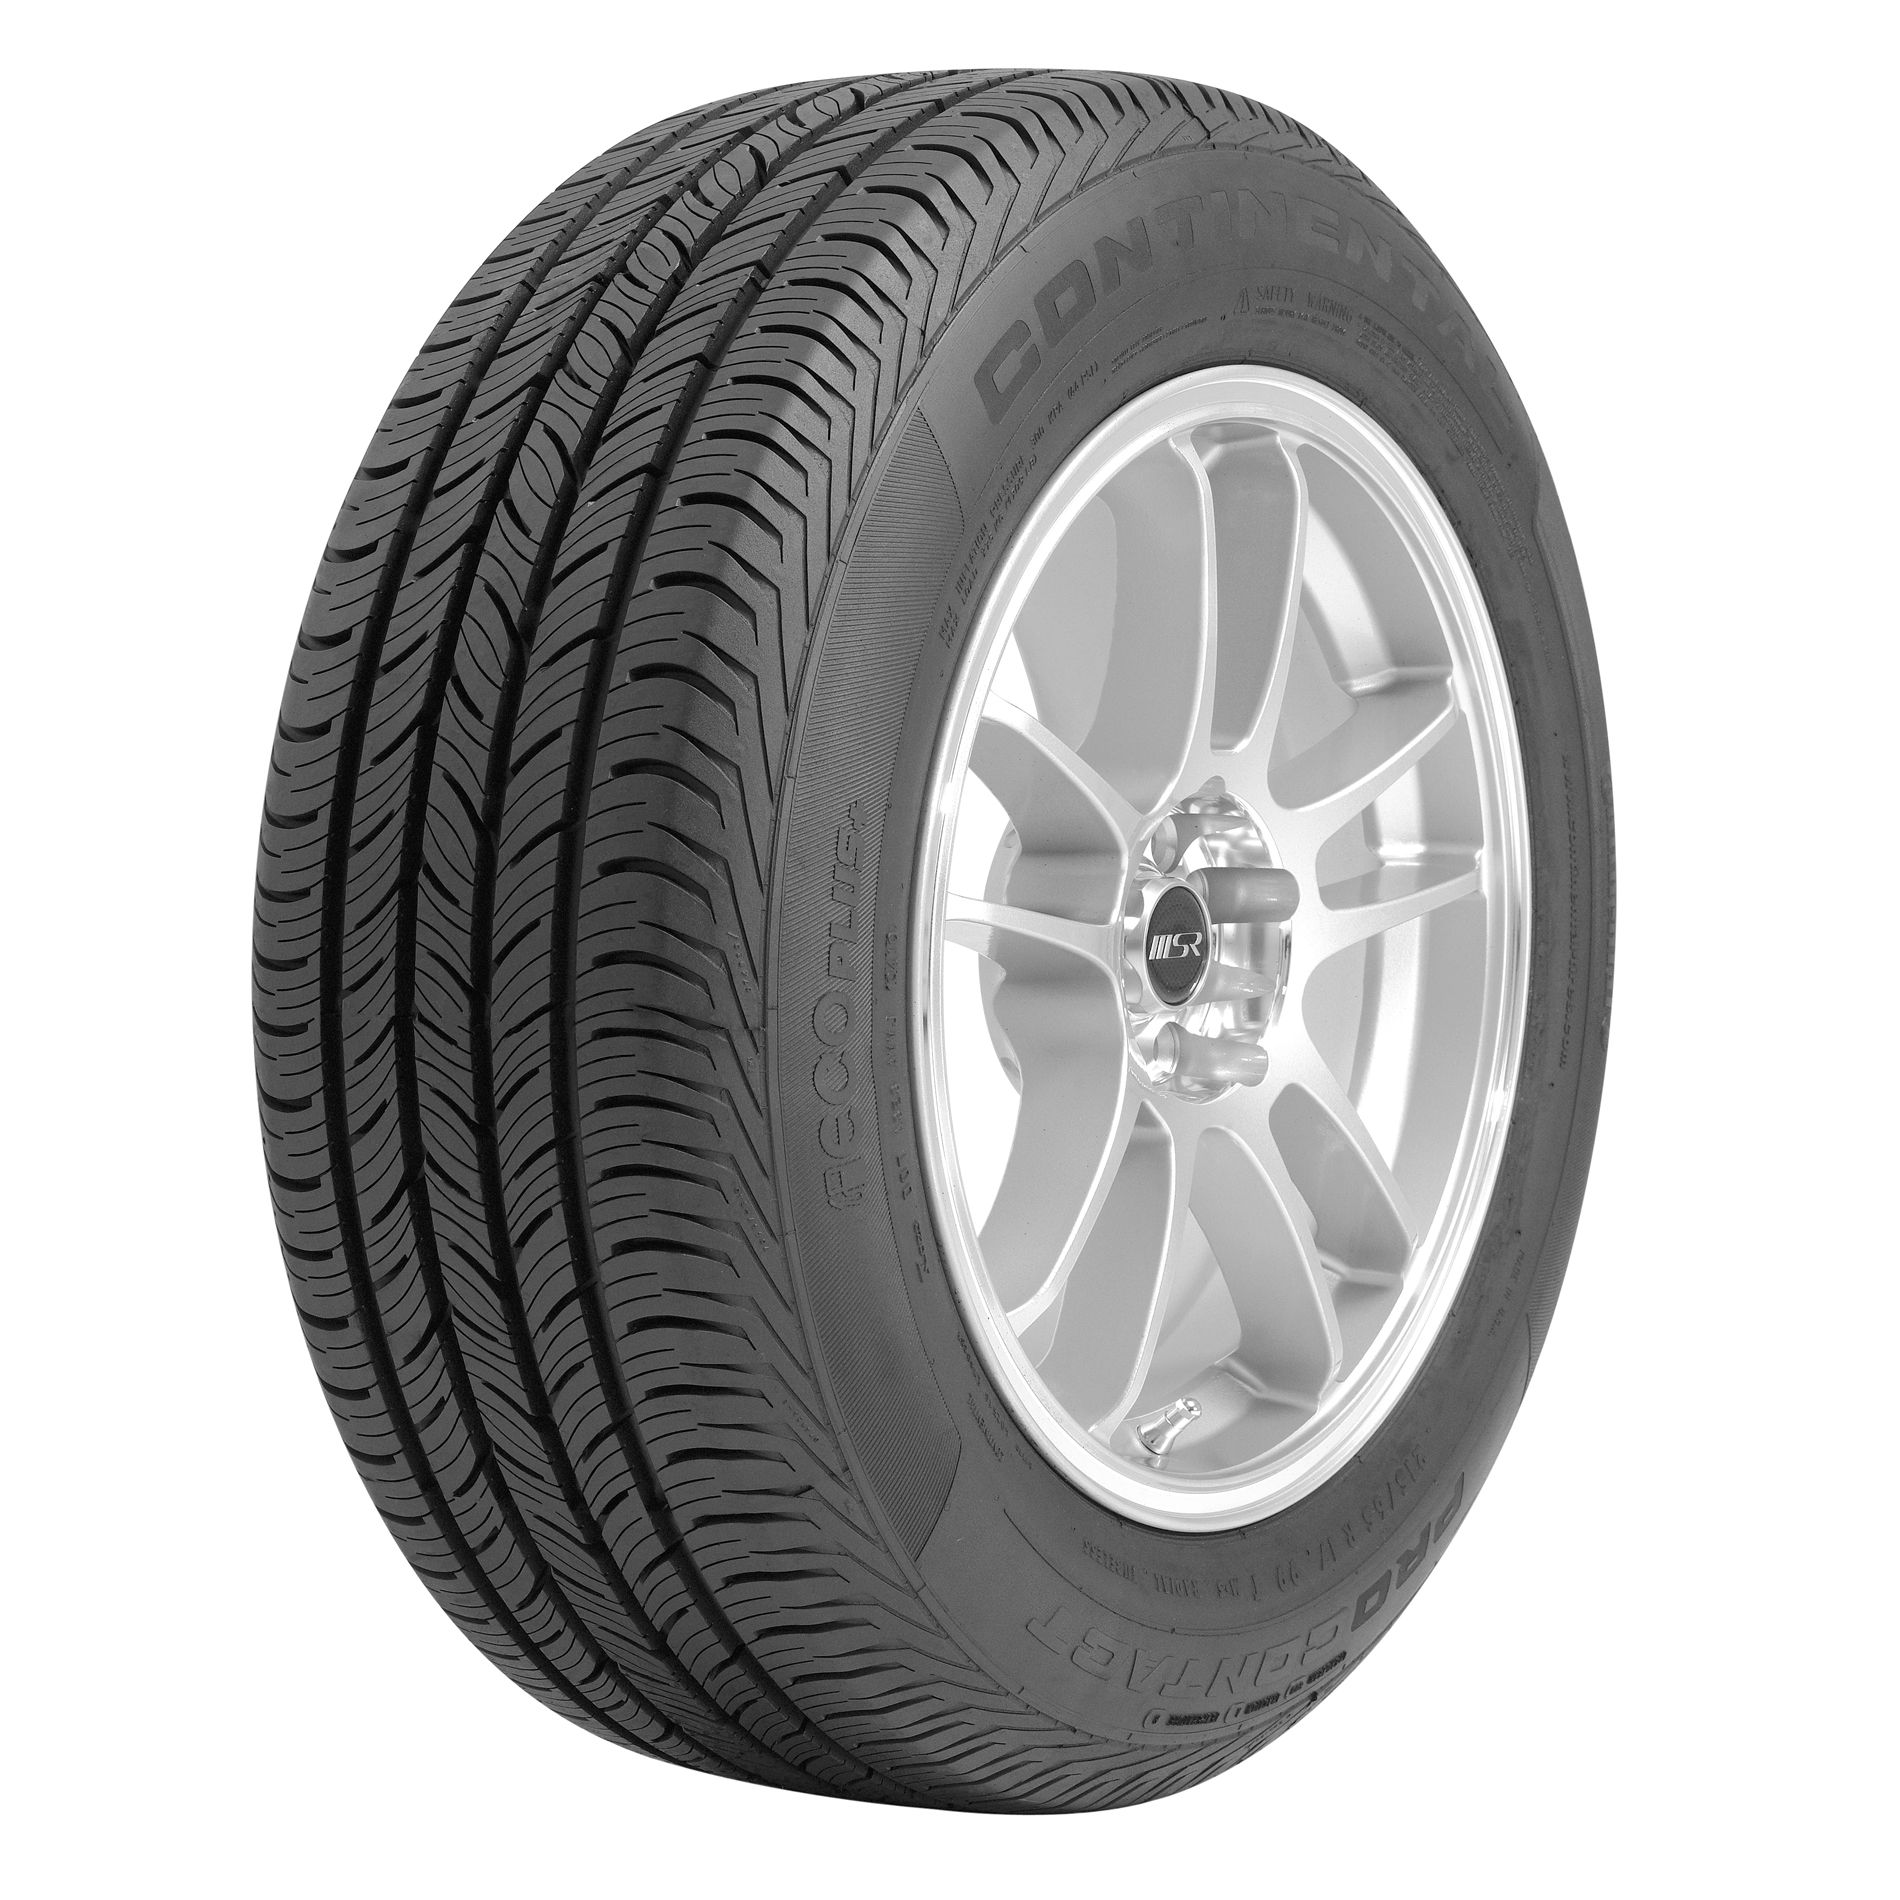 Continental Pro Contact Eco Plus - 215/55R18 95T BW - All-Season Tire